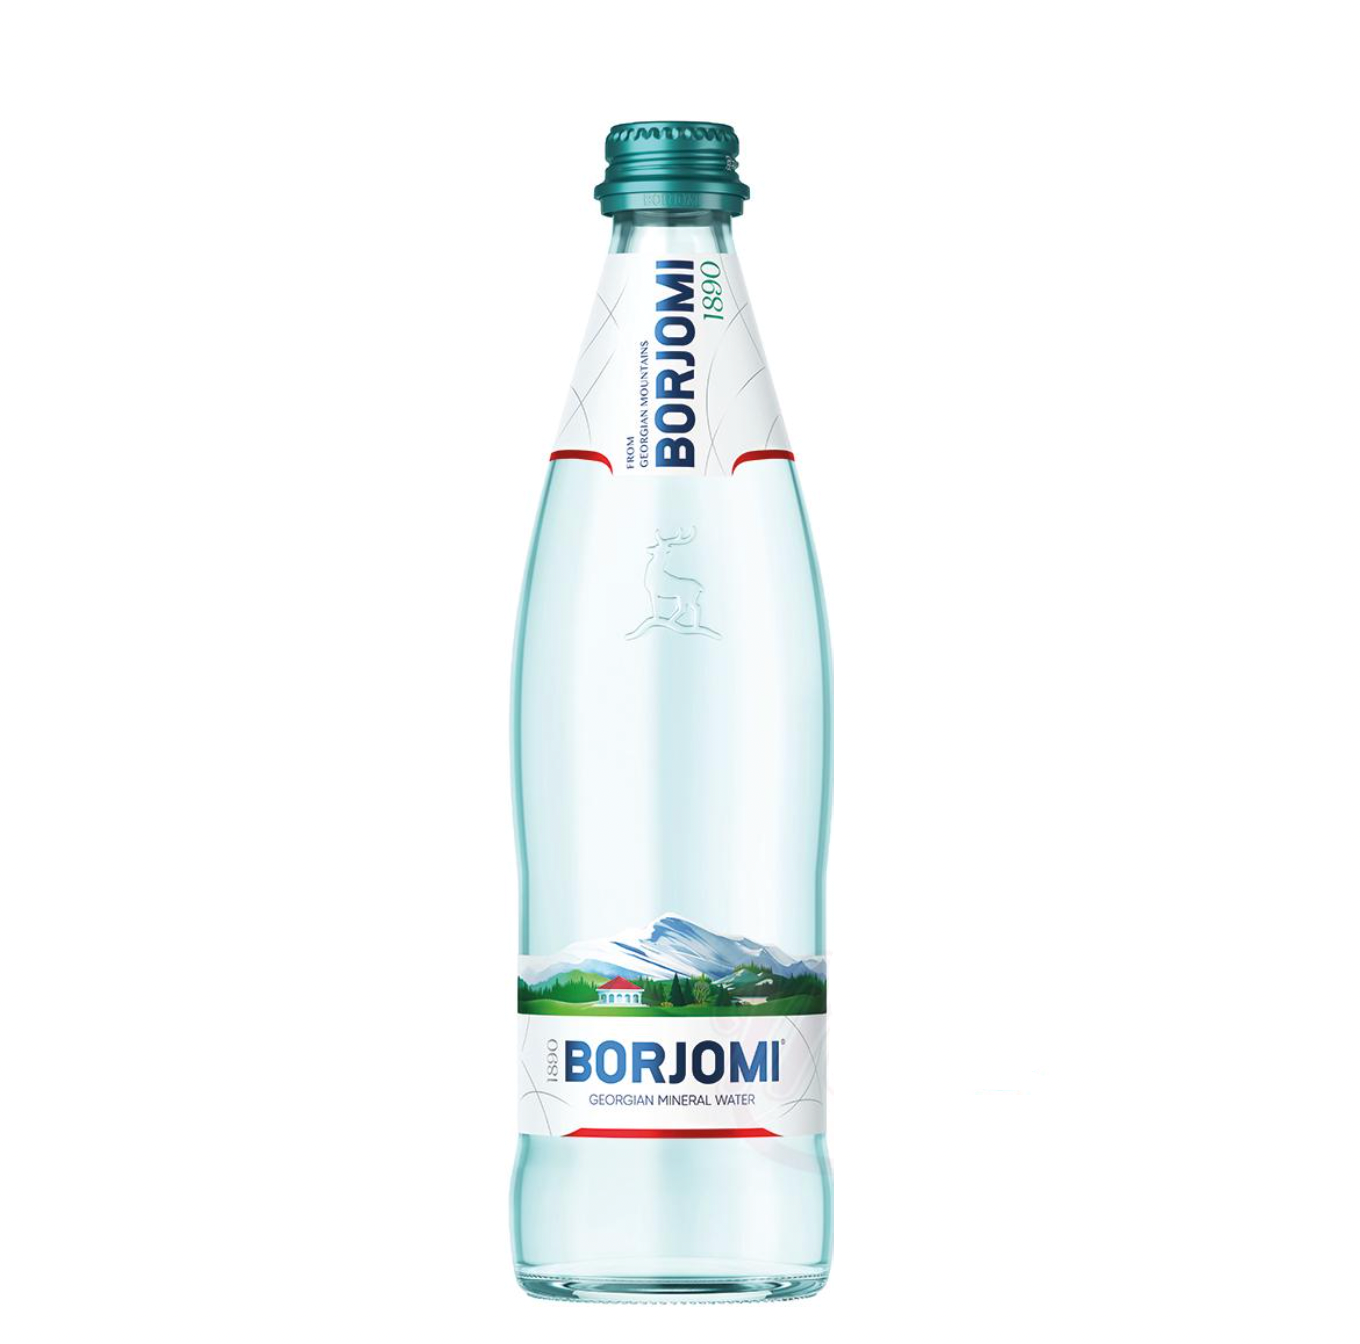 Borjomi - Natuurlijk mineraalwater 500ml.